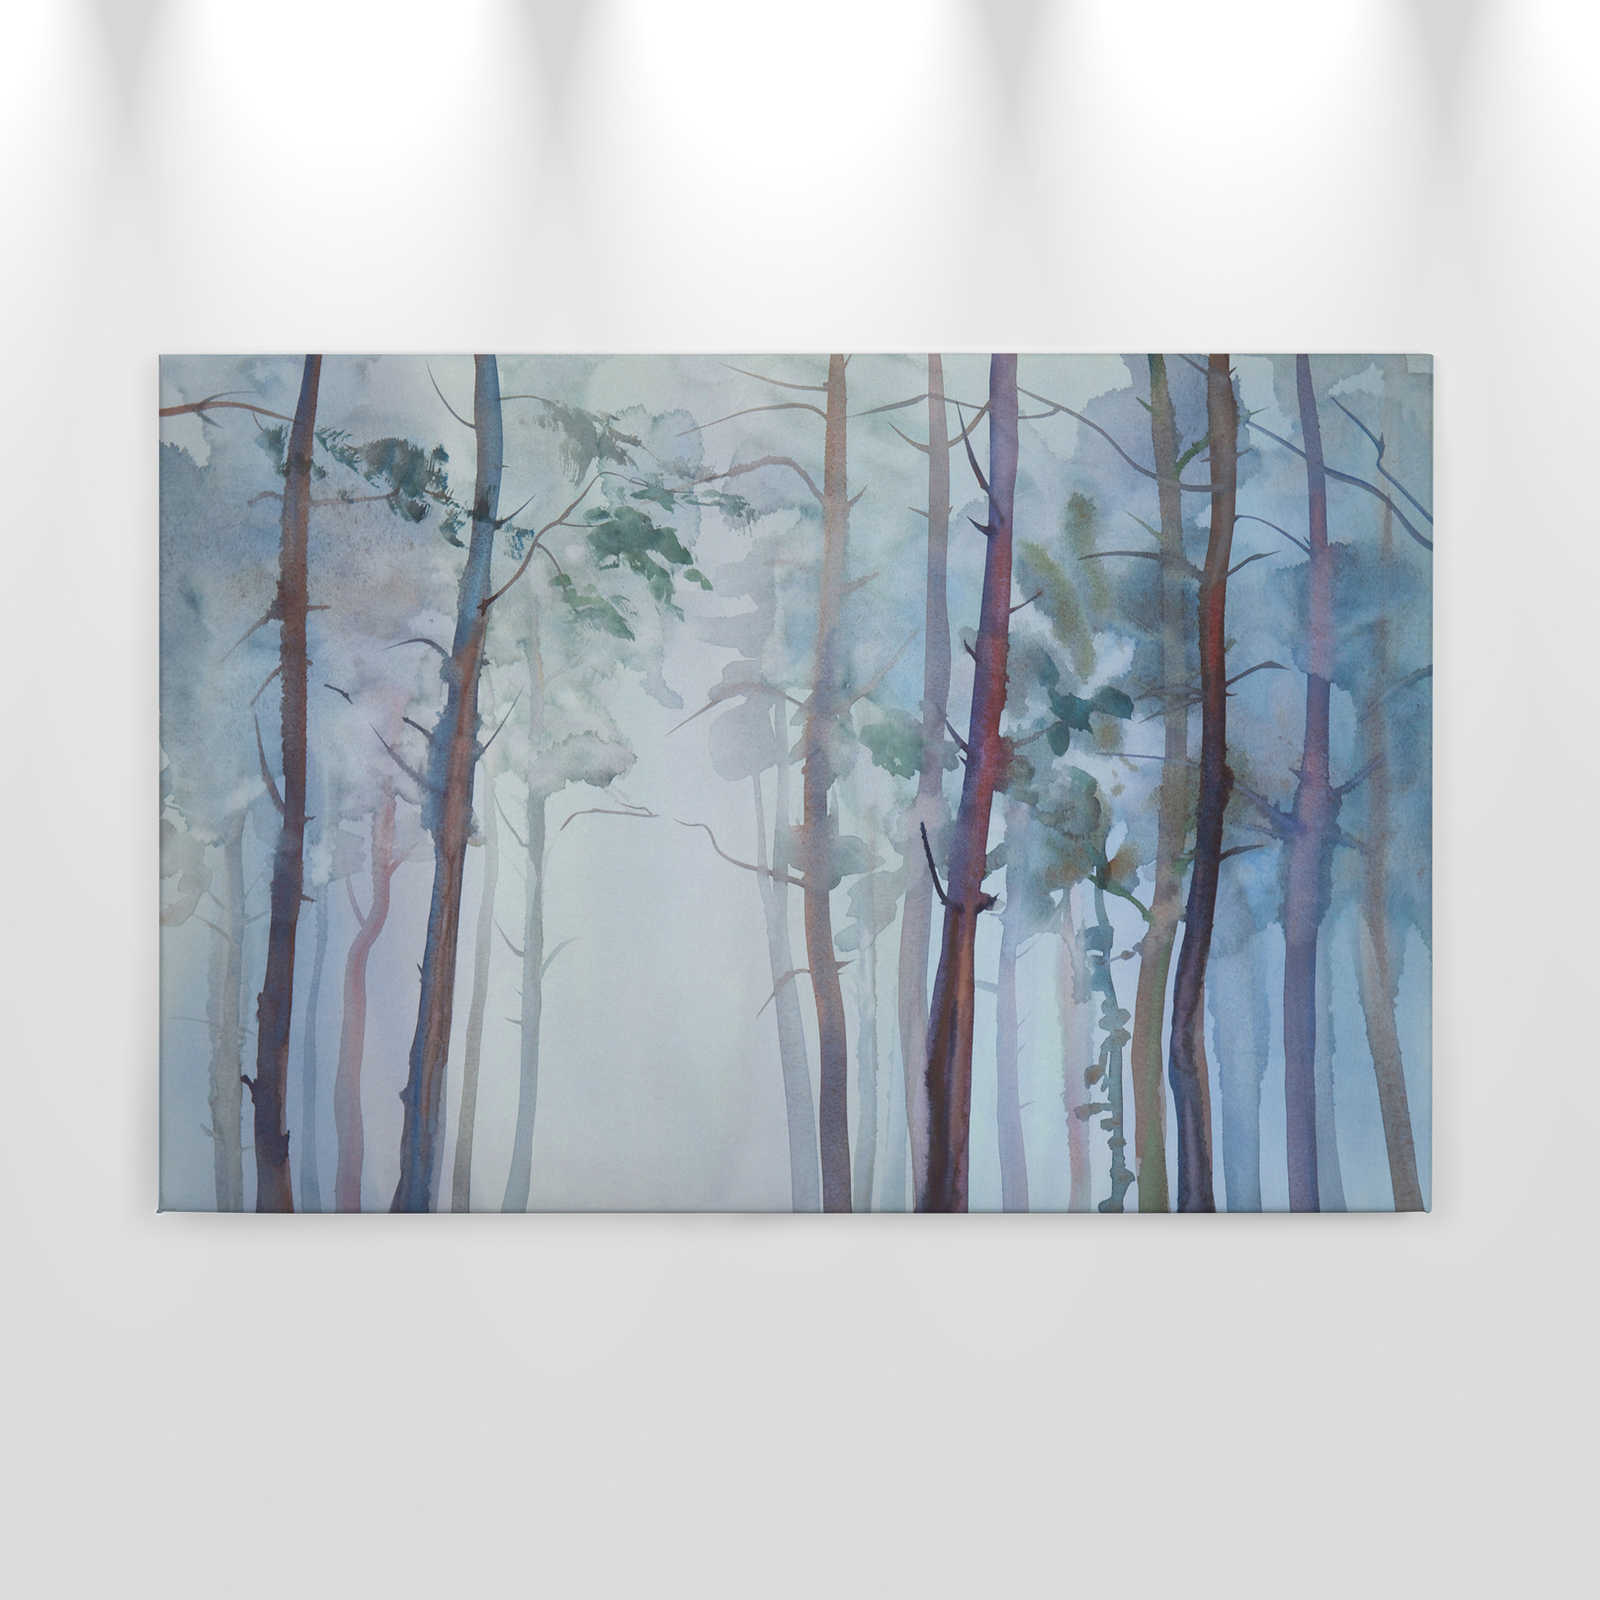             Canvas met bosmotief in aquarelstijl - 0,90 m x 0,60 m
        